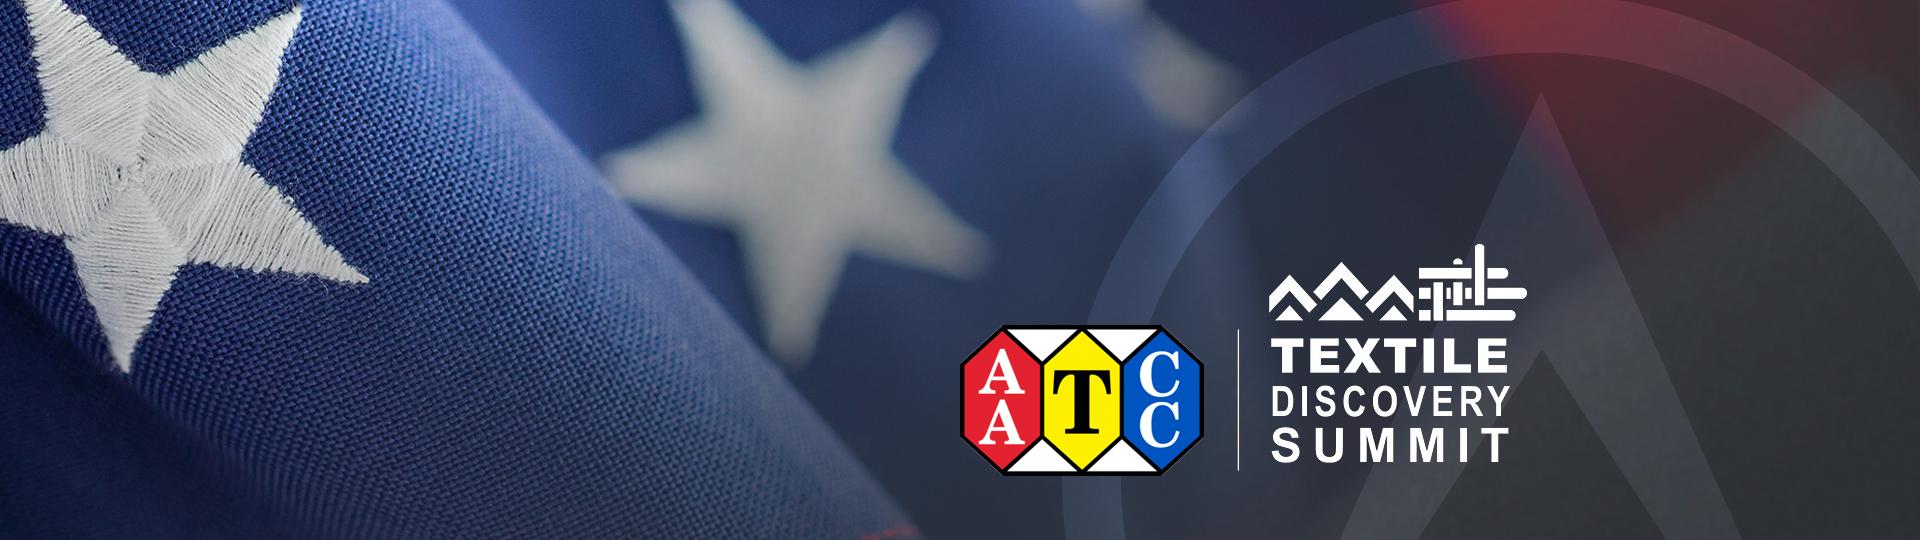 AATCC Textile Discovery Summit 2021